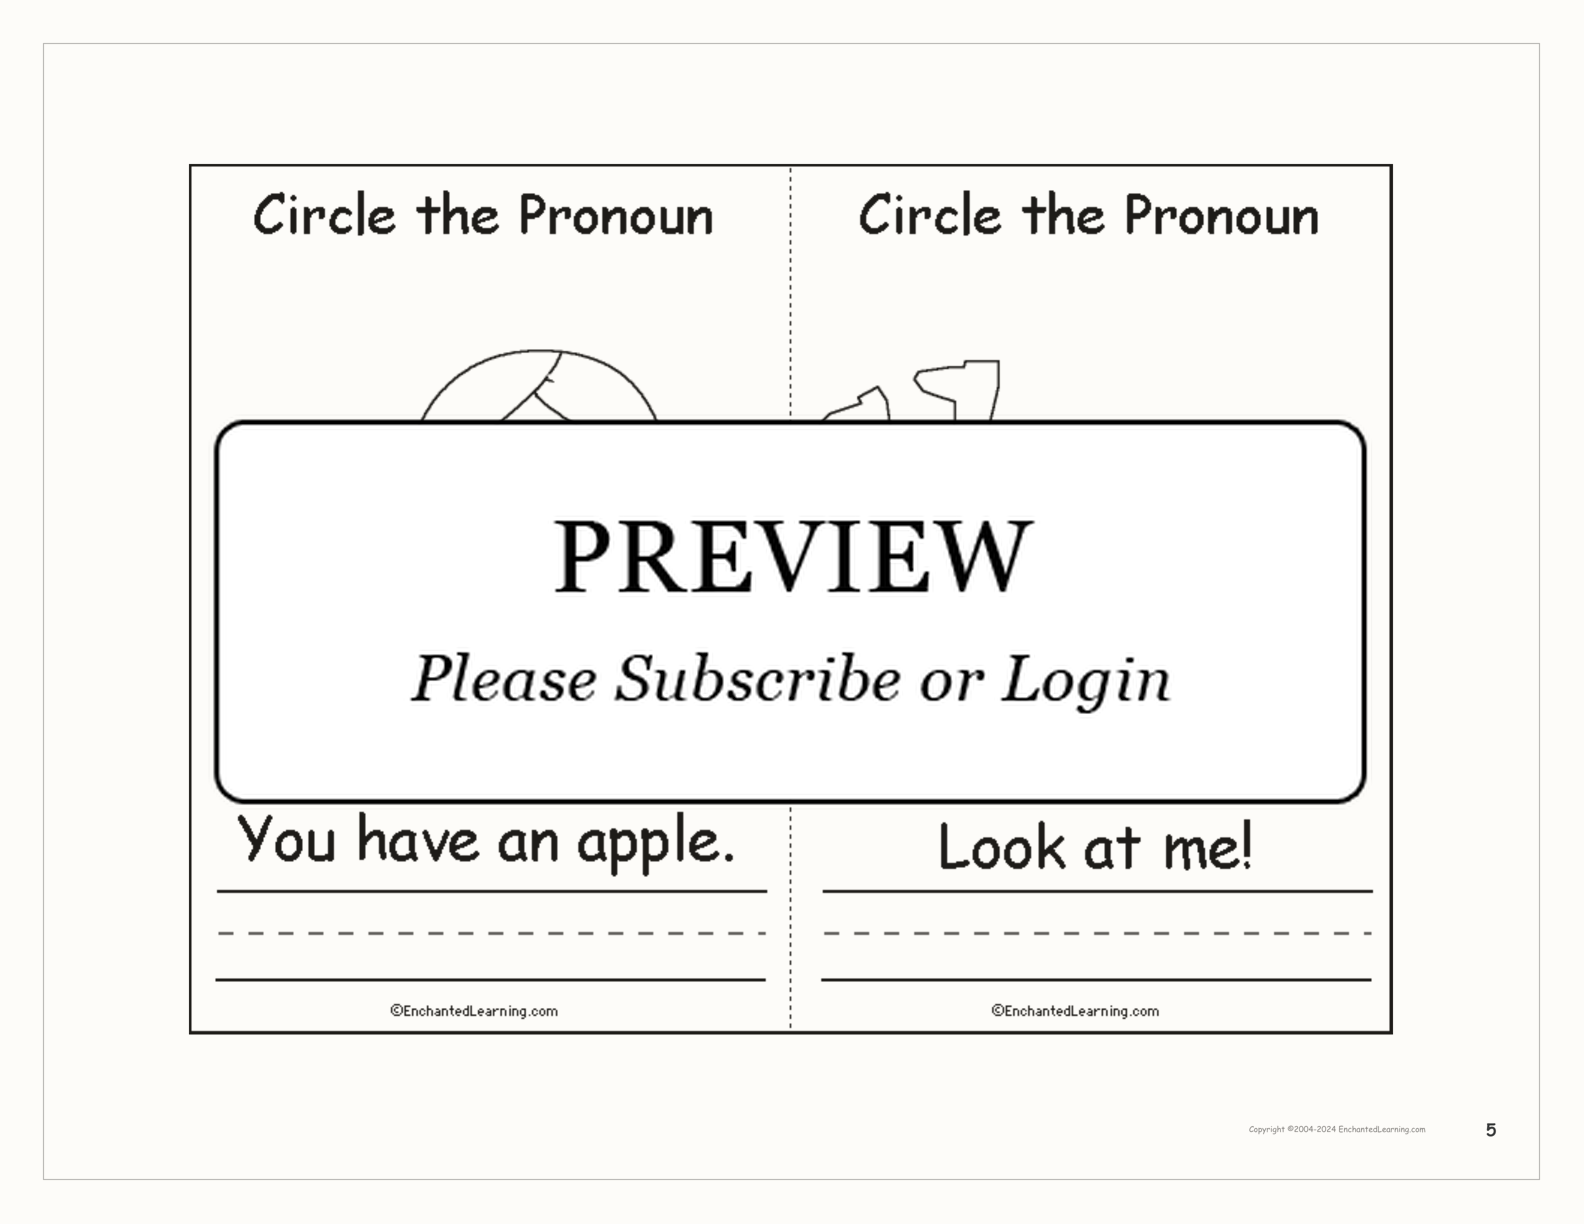 Circle the Pronouns Book interactive printout page 5